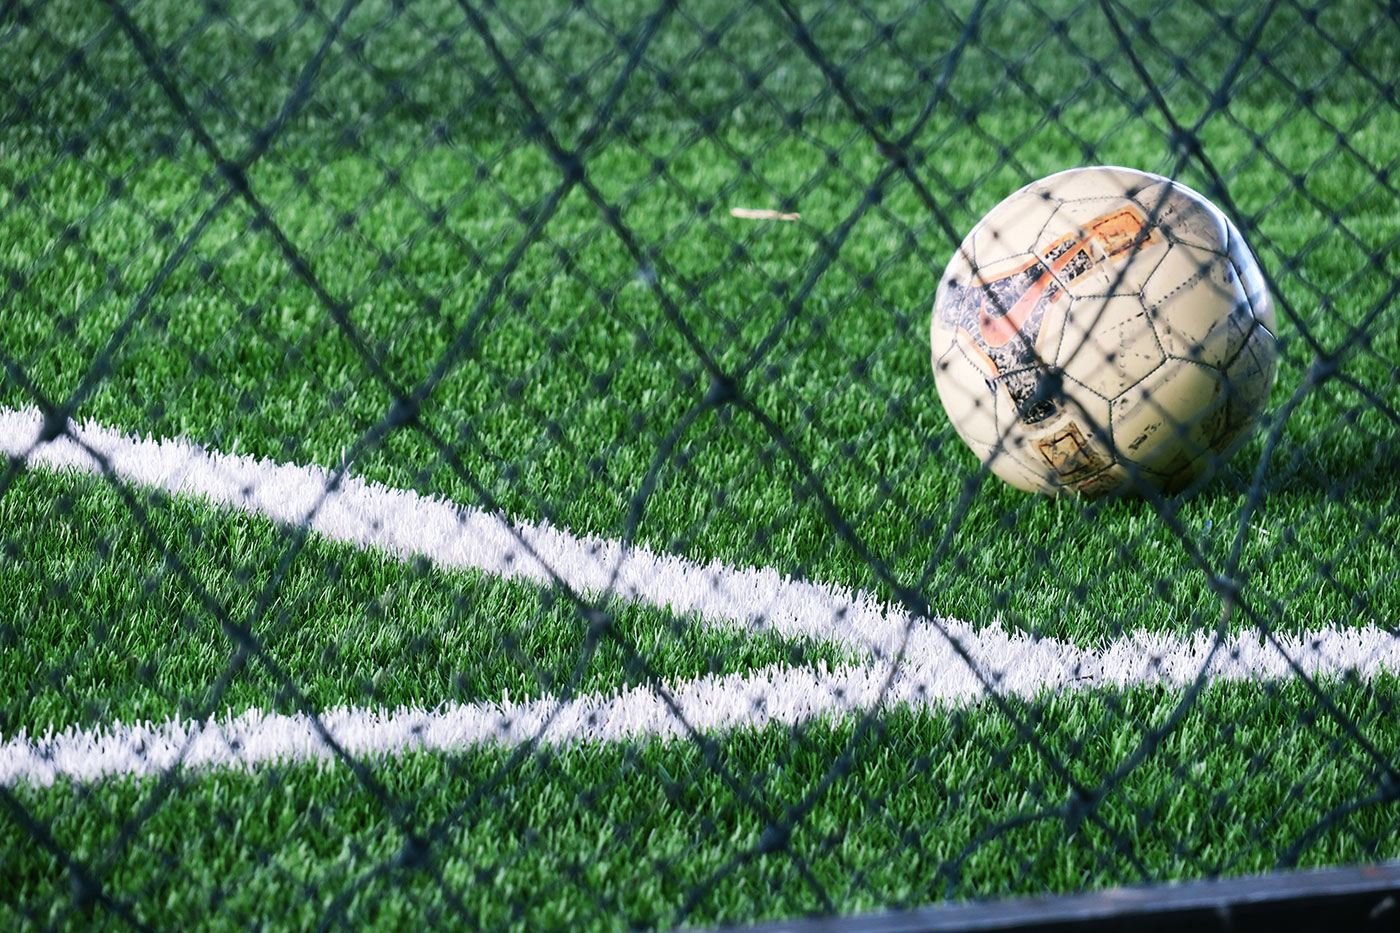 Soccer ball placed near court line